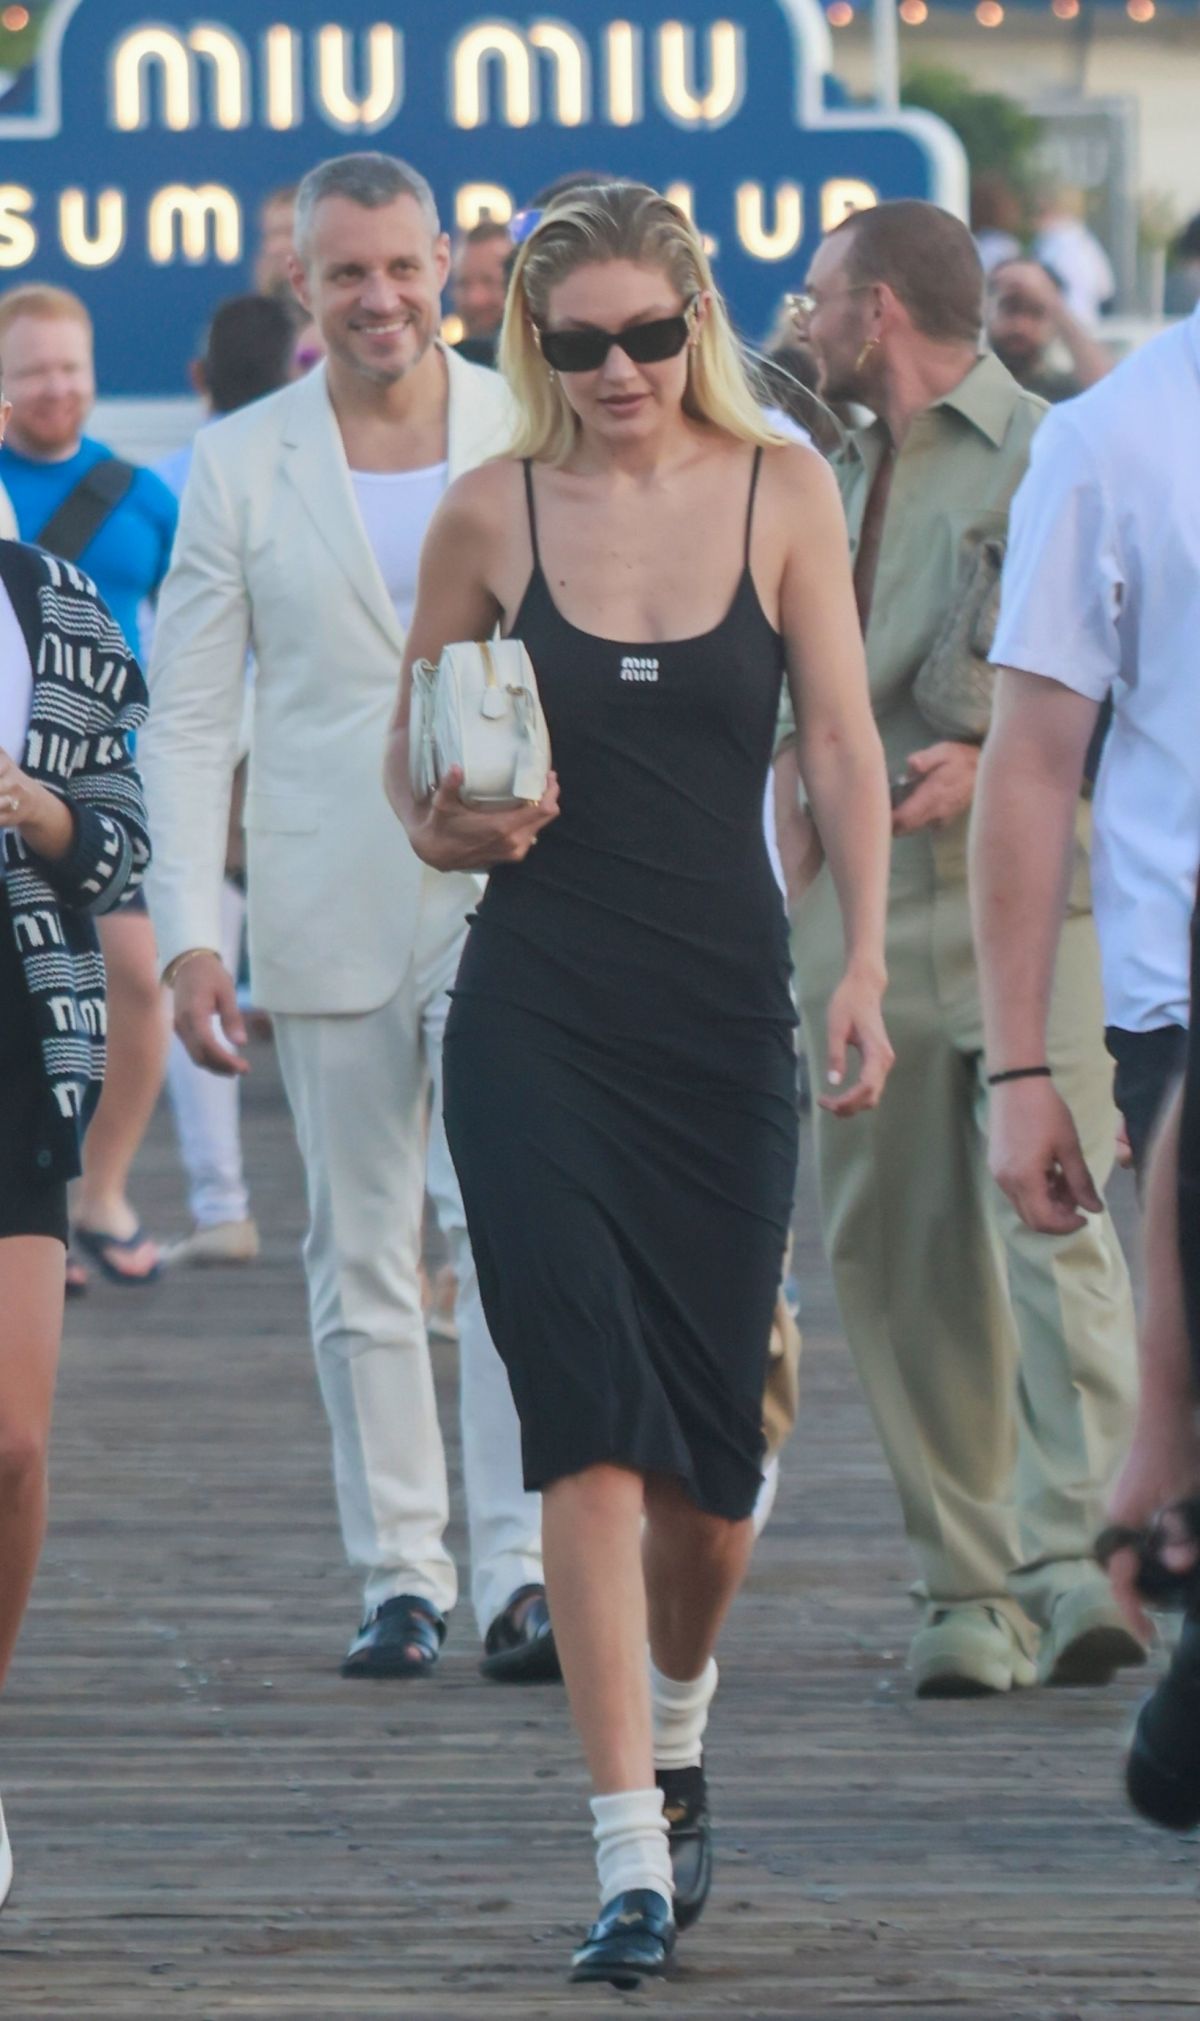 Gigi Hadid Arrives at Miu Miu Summer Club Beach Party